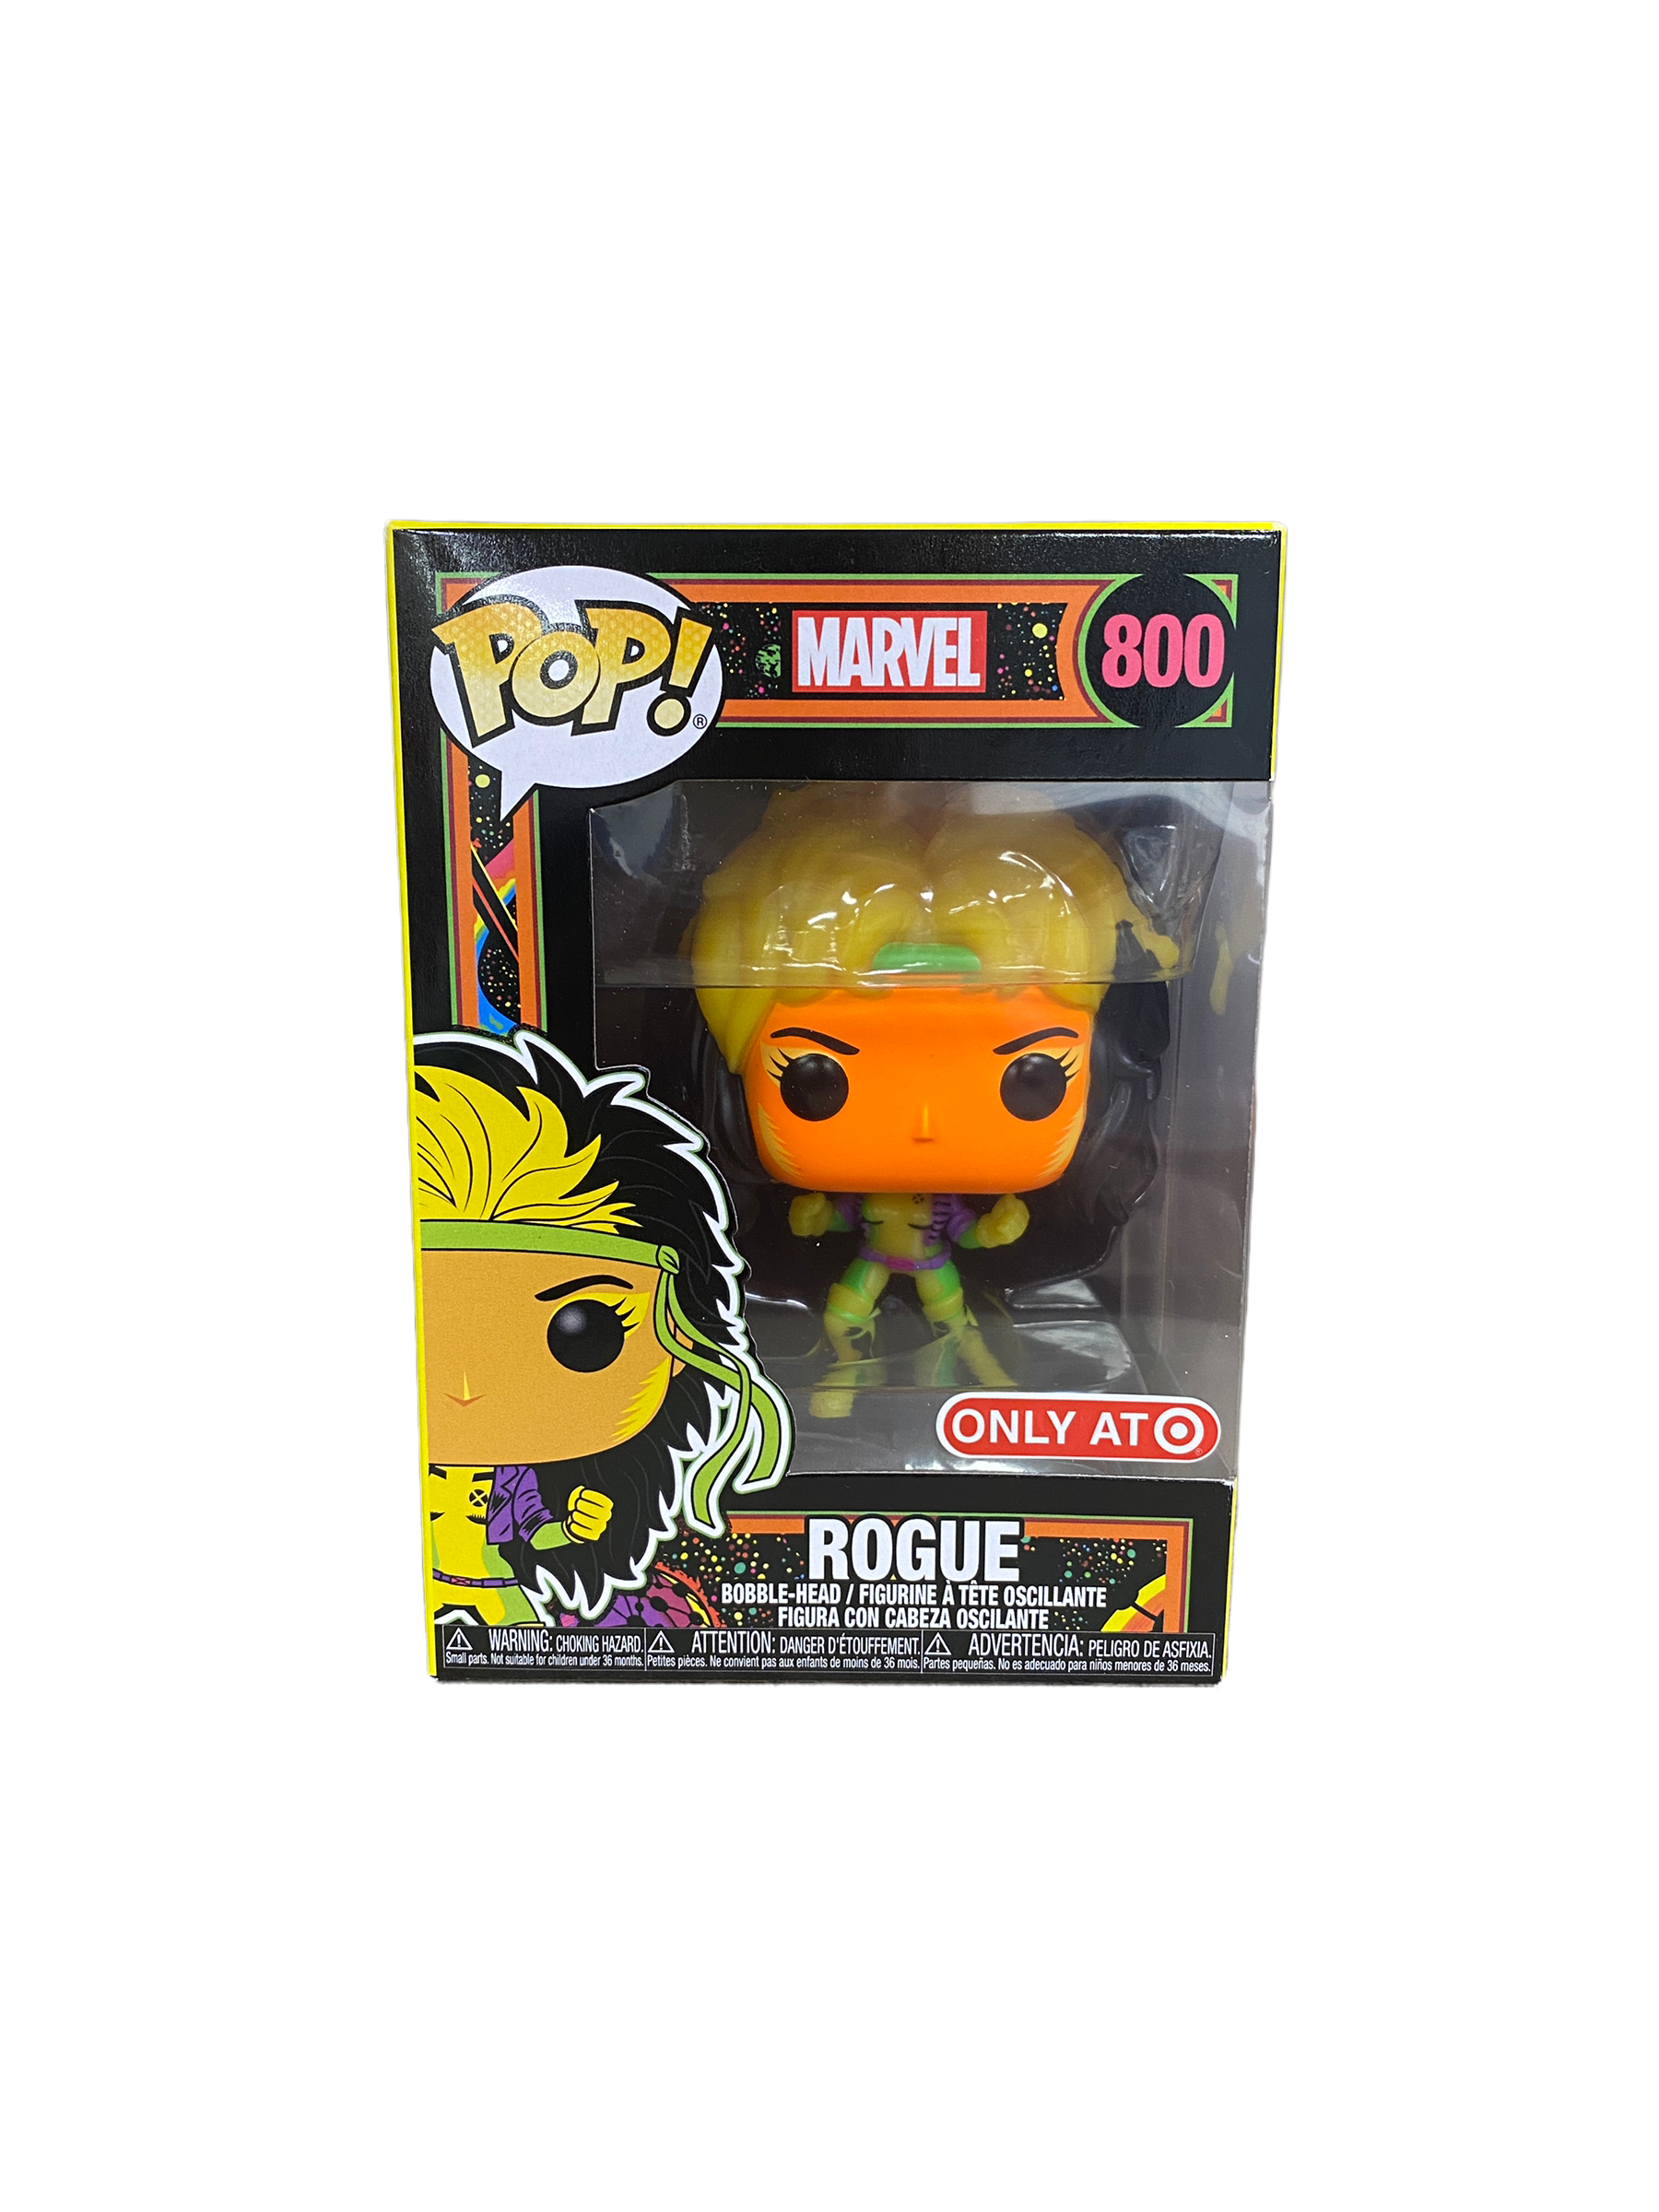 Rogue #800 (Blacklight) Funko Pop! - Marvel - Target Exclusive - Condition 8.5/10